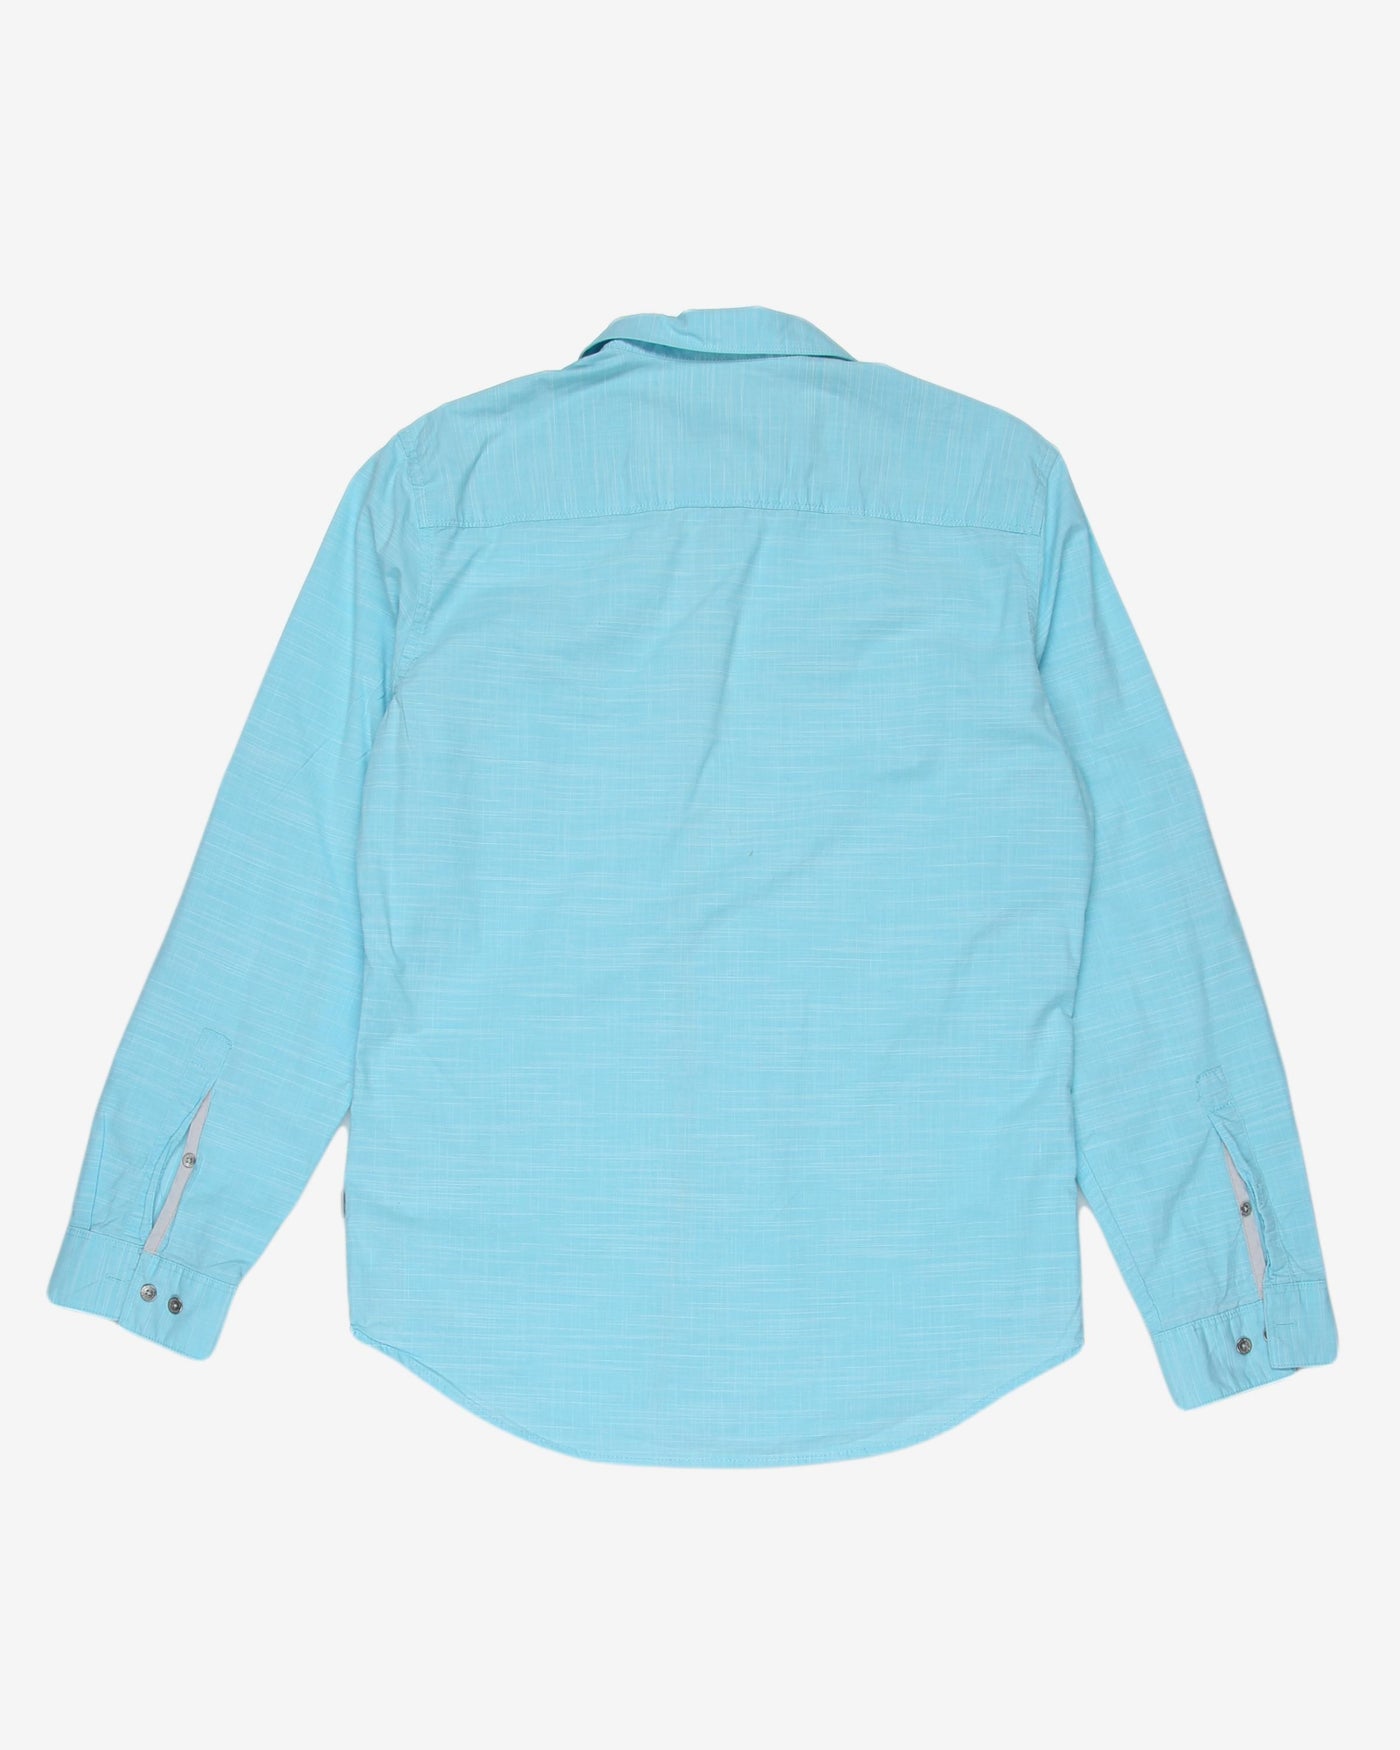 Calvin Klein Blue Button Up Shirt - M